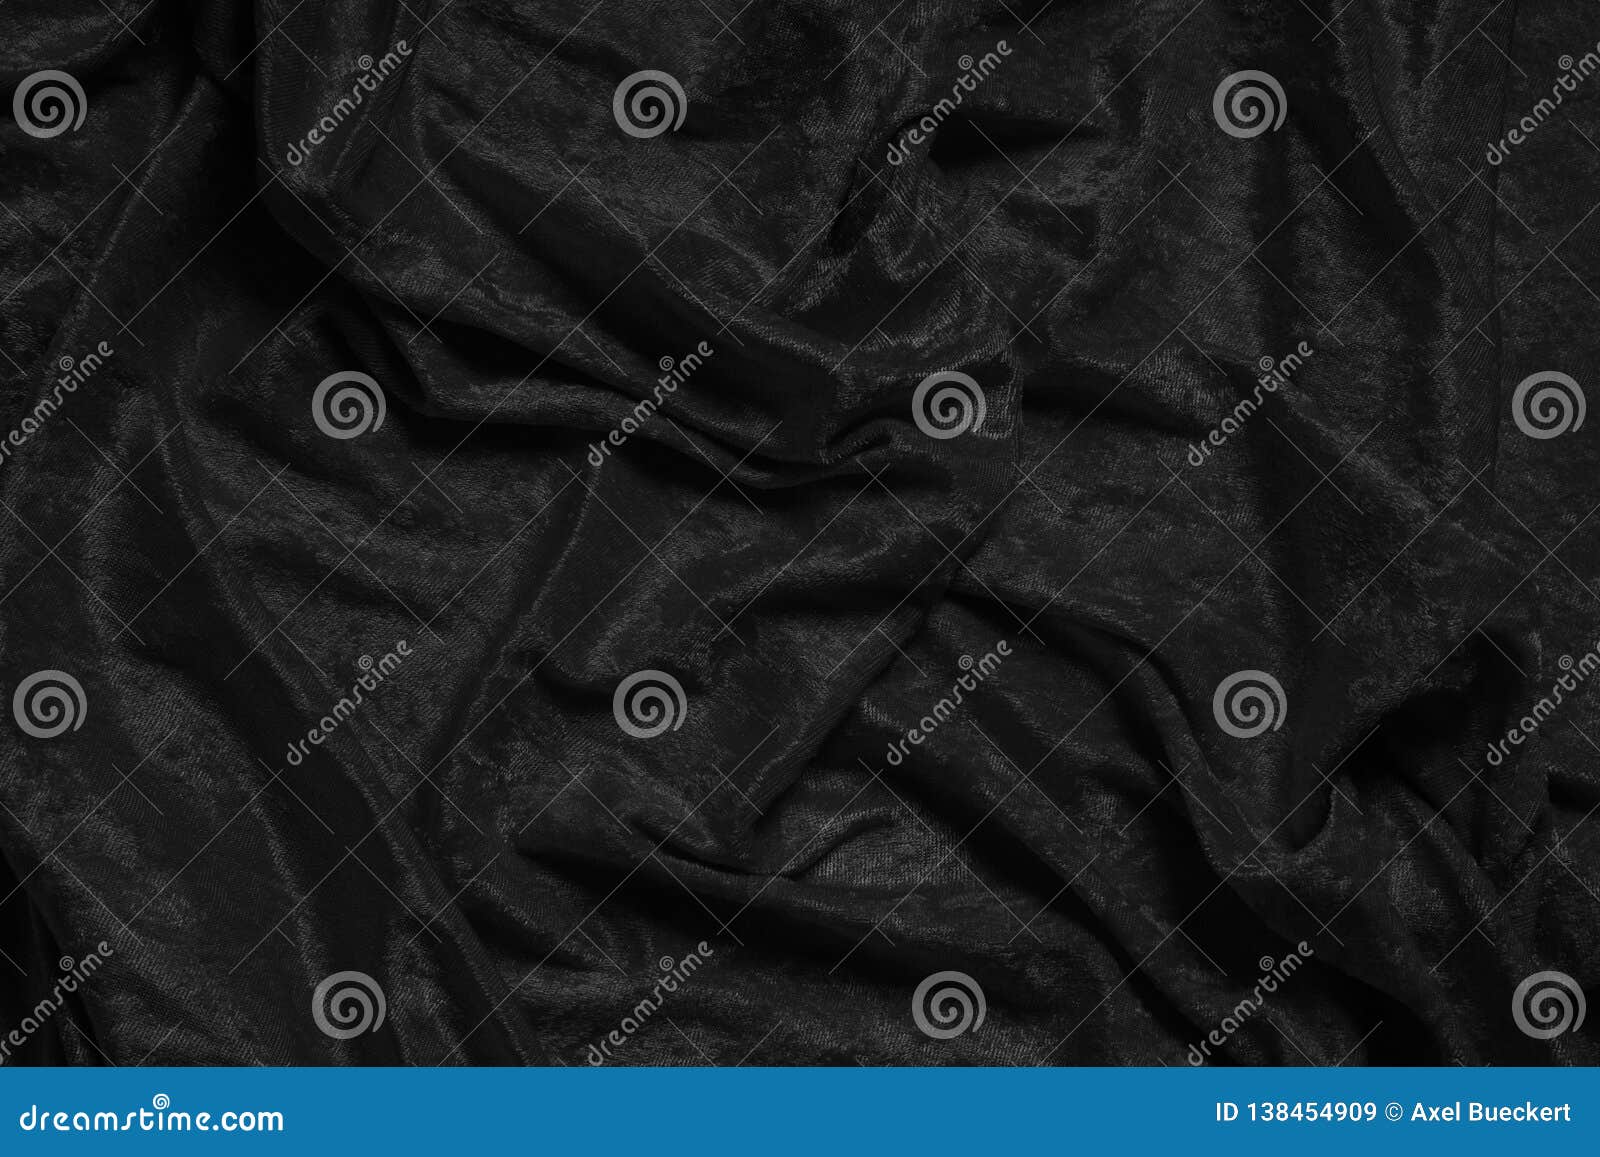 Black velvet background stock image. Image of textured - 138454909